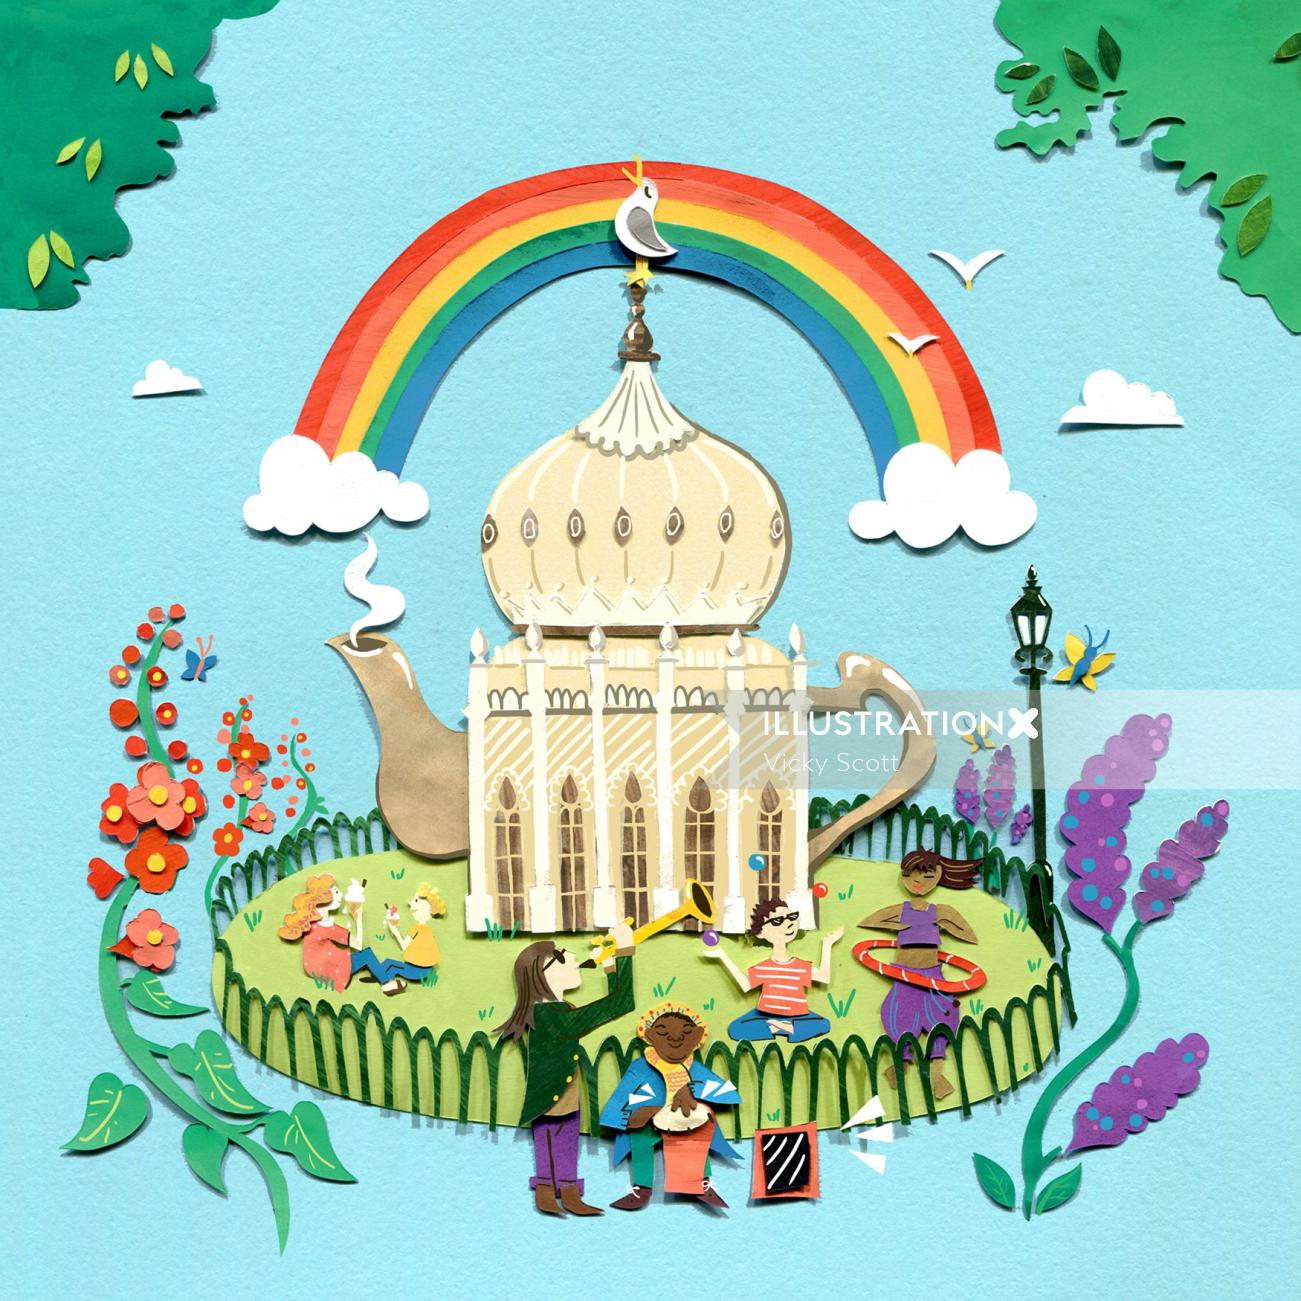 teapot, architecture, brighton pavilion, garden, crowd, travel, flowers, rainbow, seagull, musicians